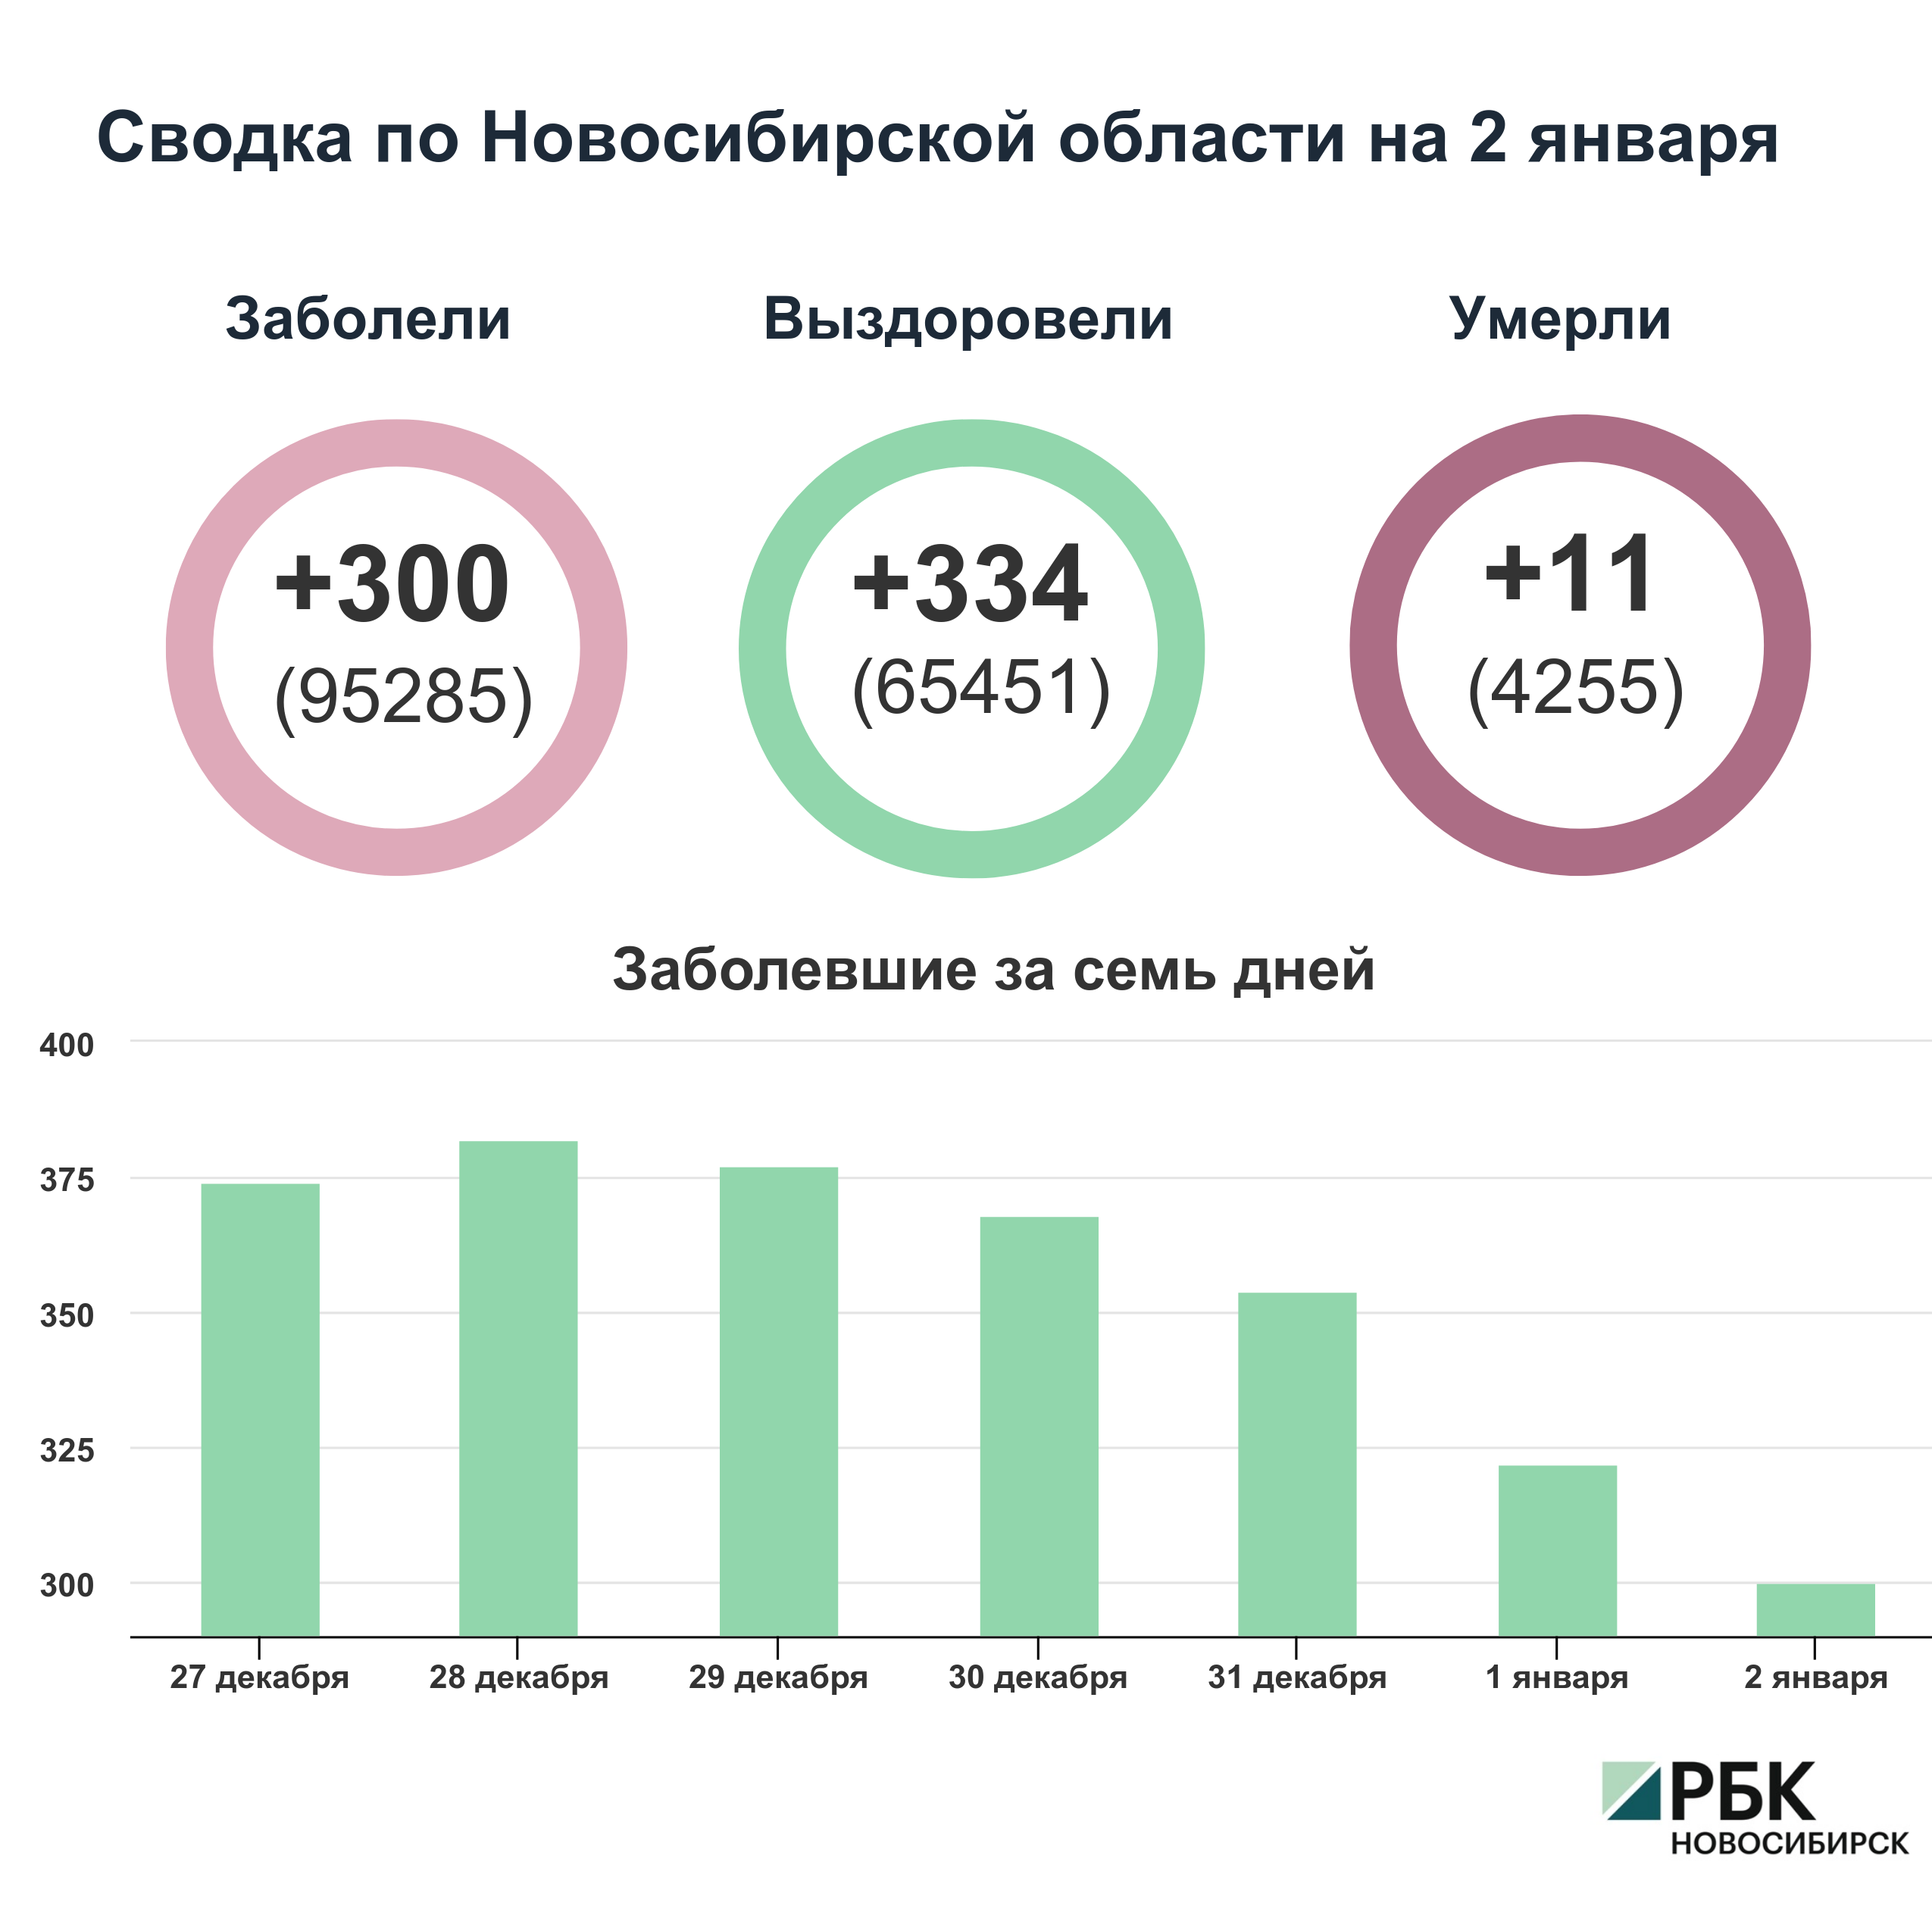 Коронавирус в Новосибирске: сводка на 2 января